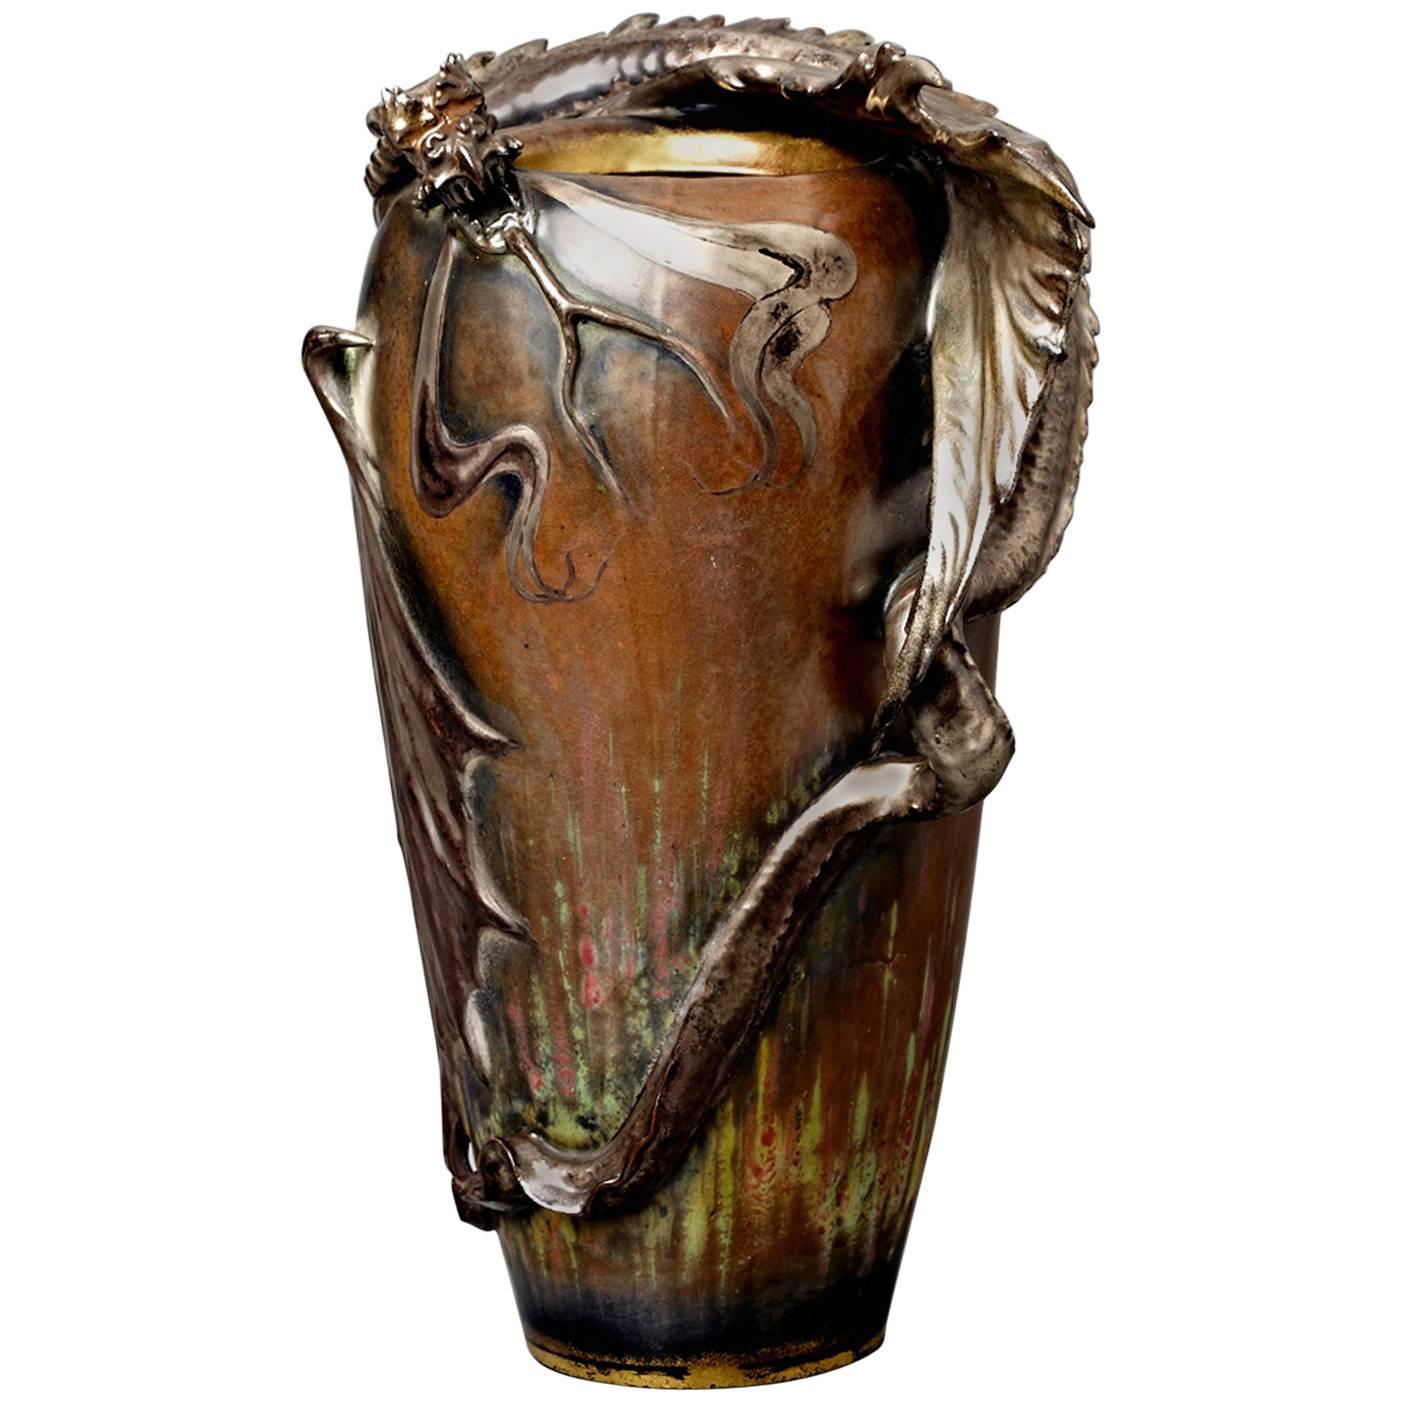 "Eastern Dragon" Art Nouveau Vase by Amphora